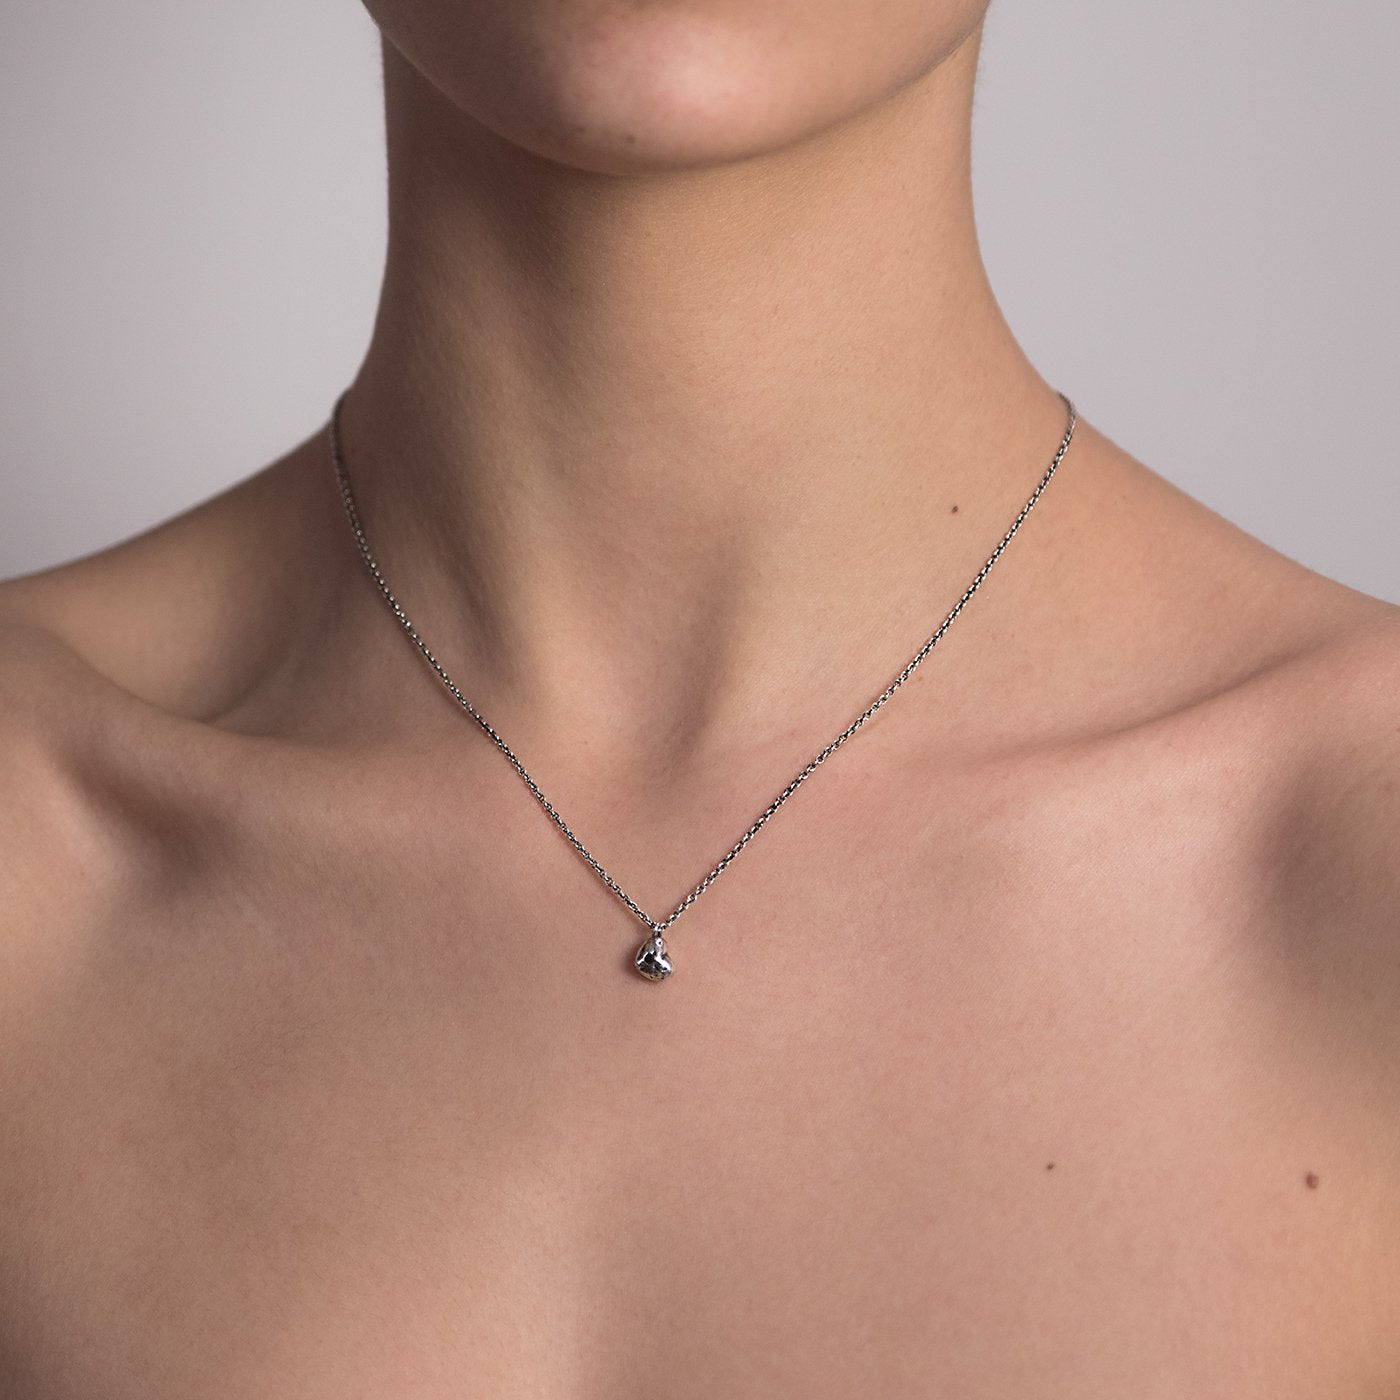 pendant chain necklace petite desire silver black diamond innan jewellery independent atelier berlin